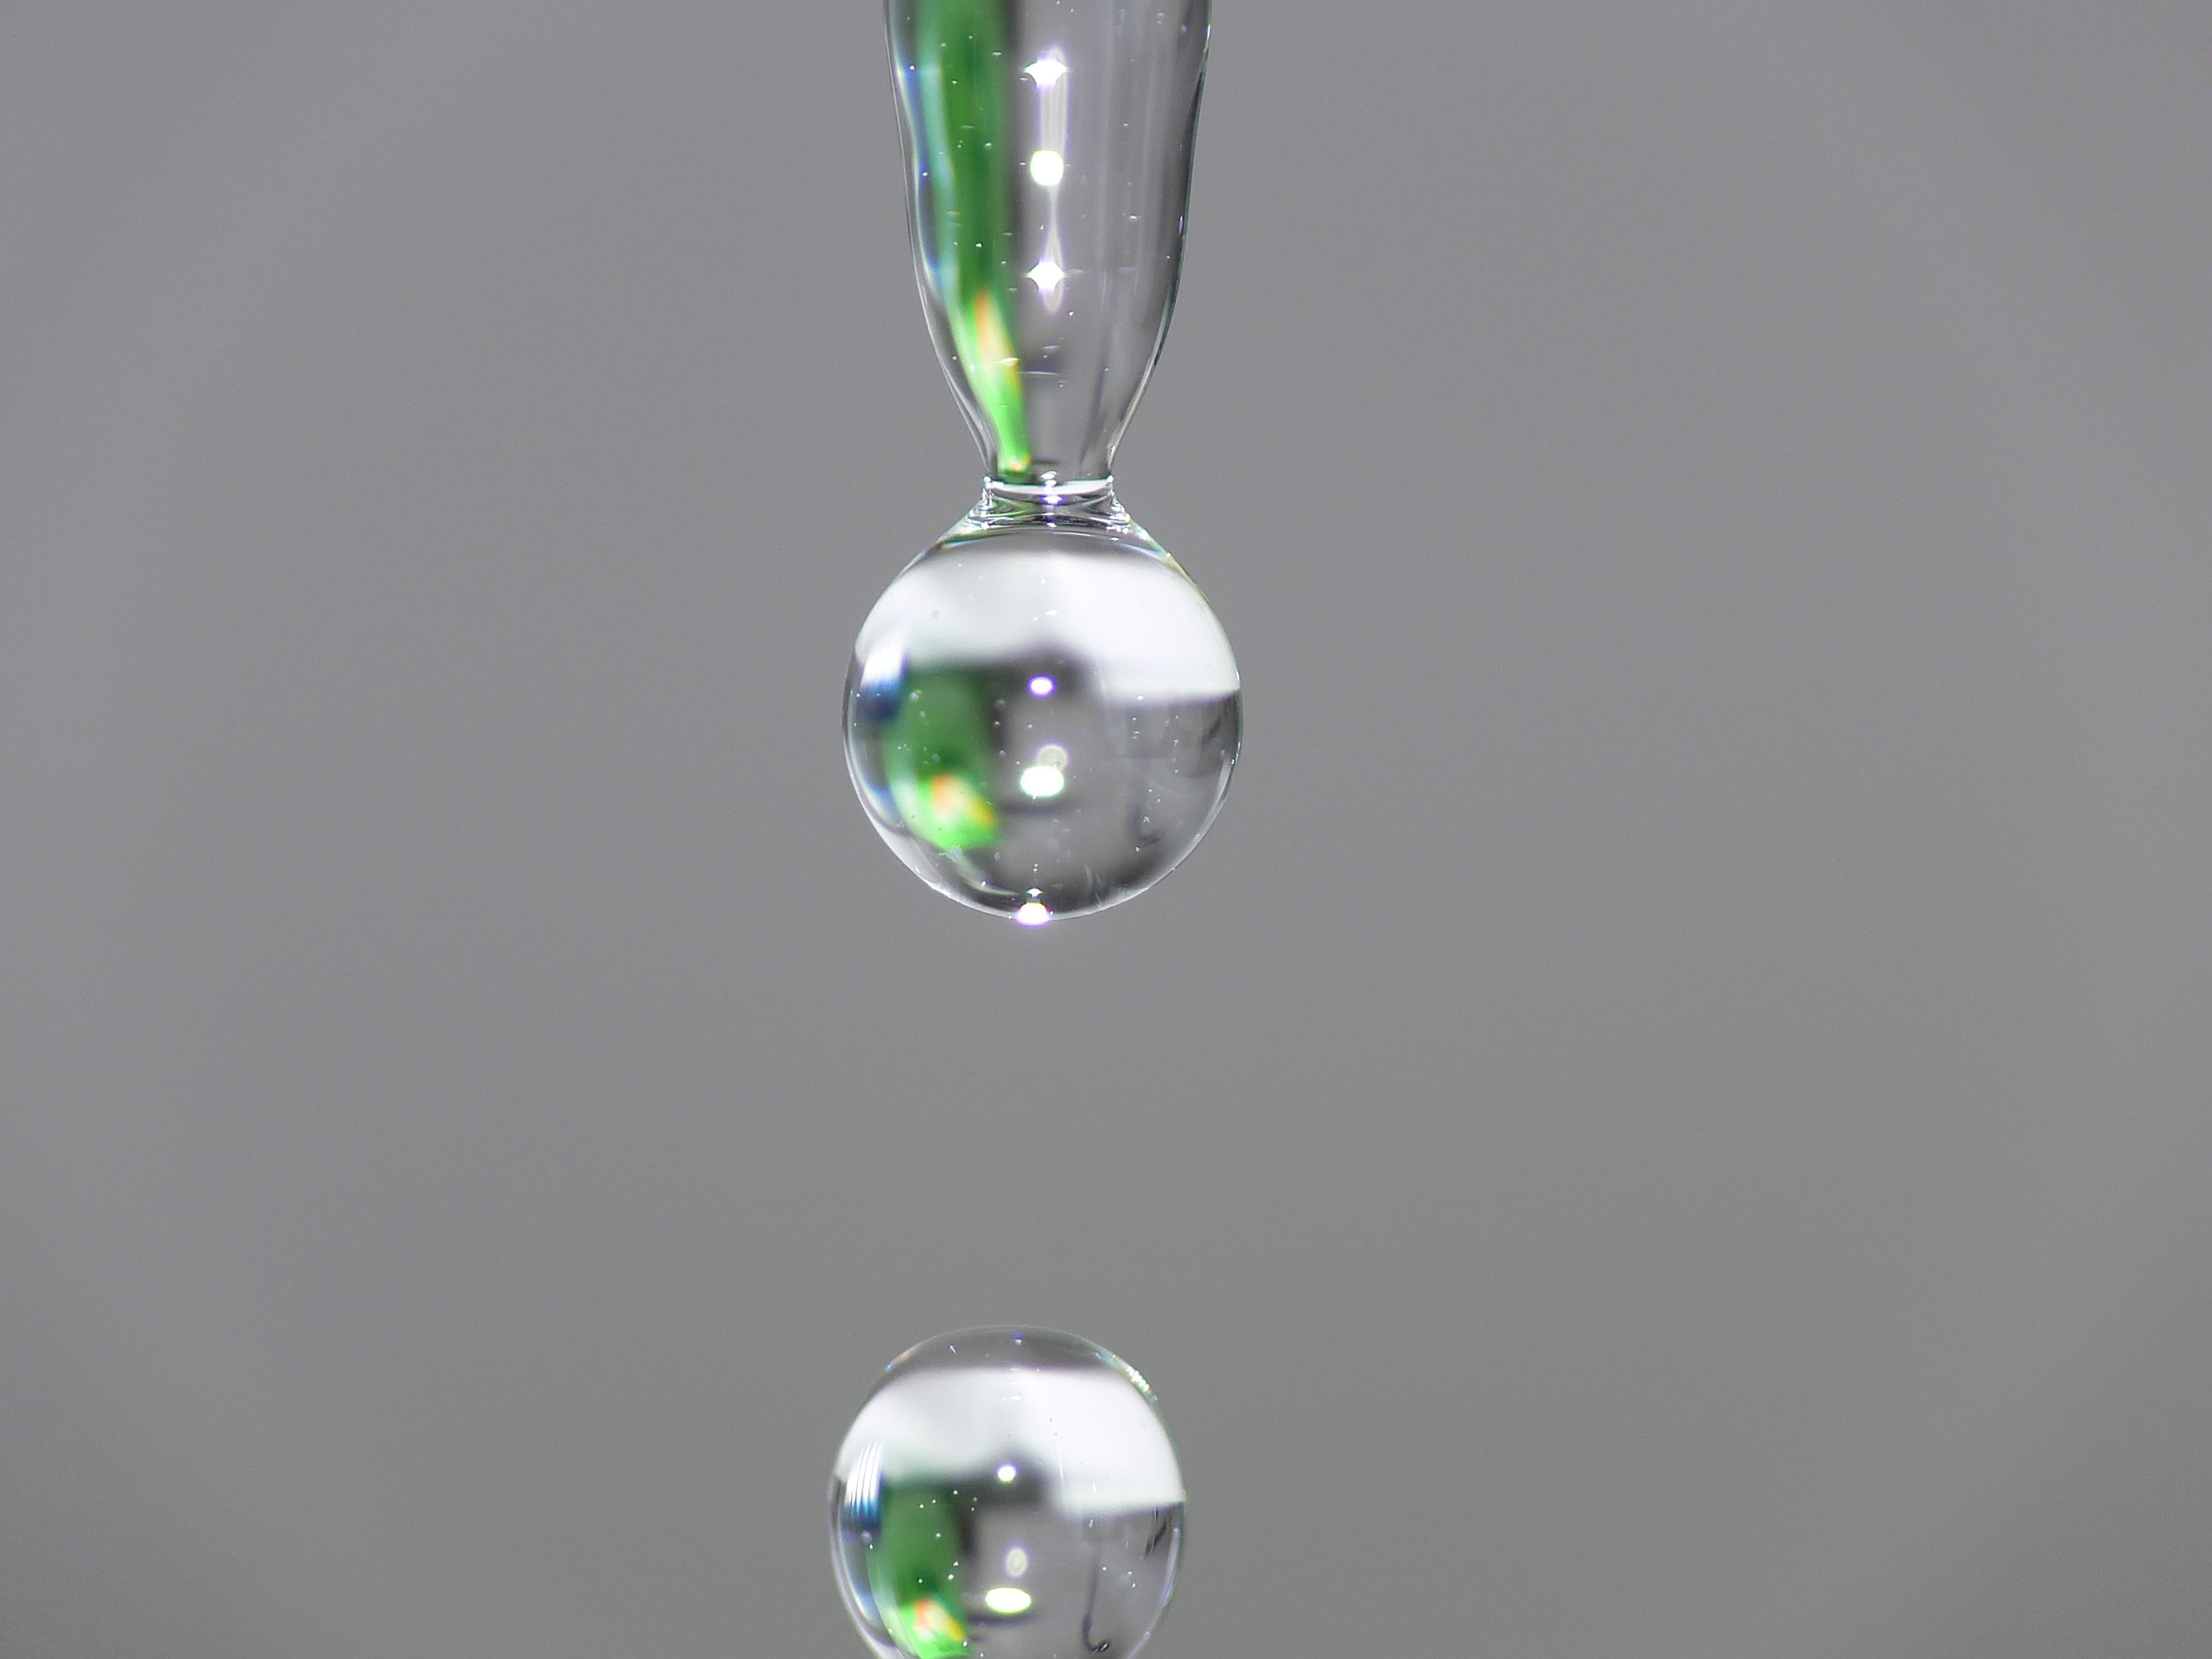 1000+ Great Water Drops Photos · Pexels · Free Stock Photos